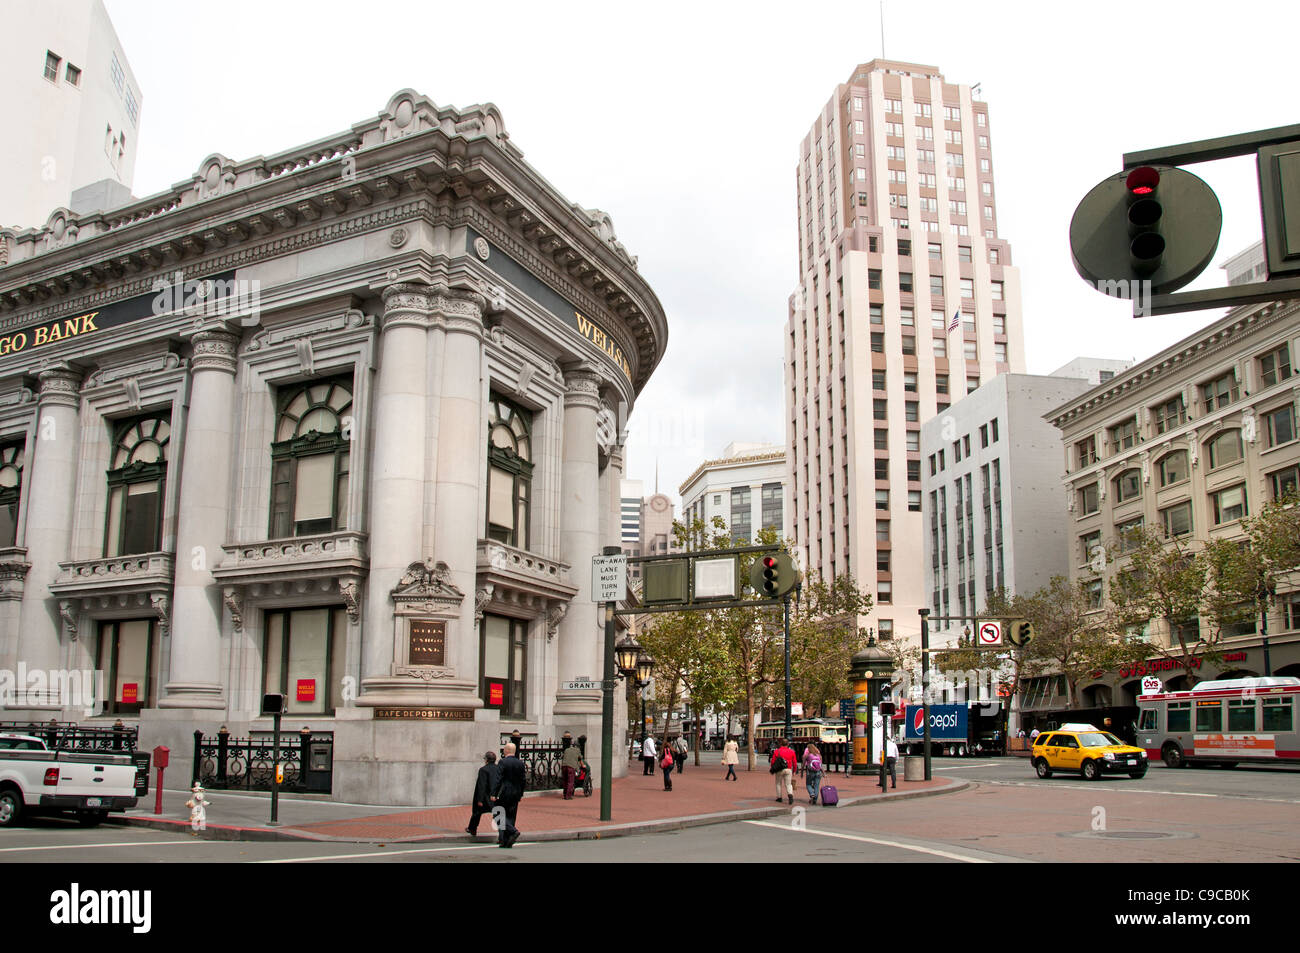 Down Town San Vereinigte Francisco California Staaten von Amerika Amerikaner / USA Stadt Stockfoto